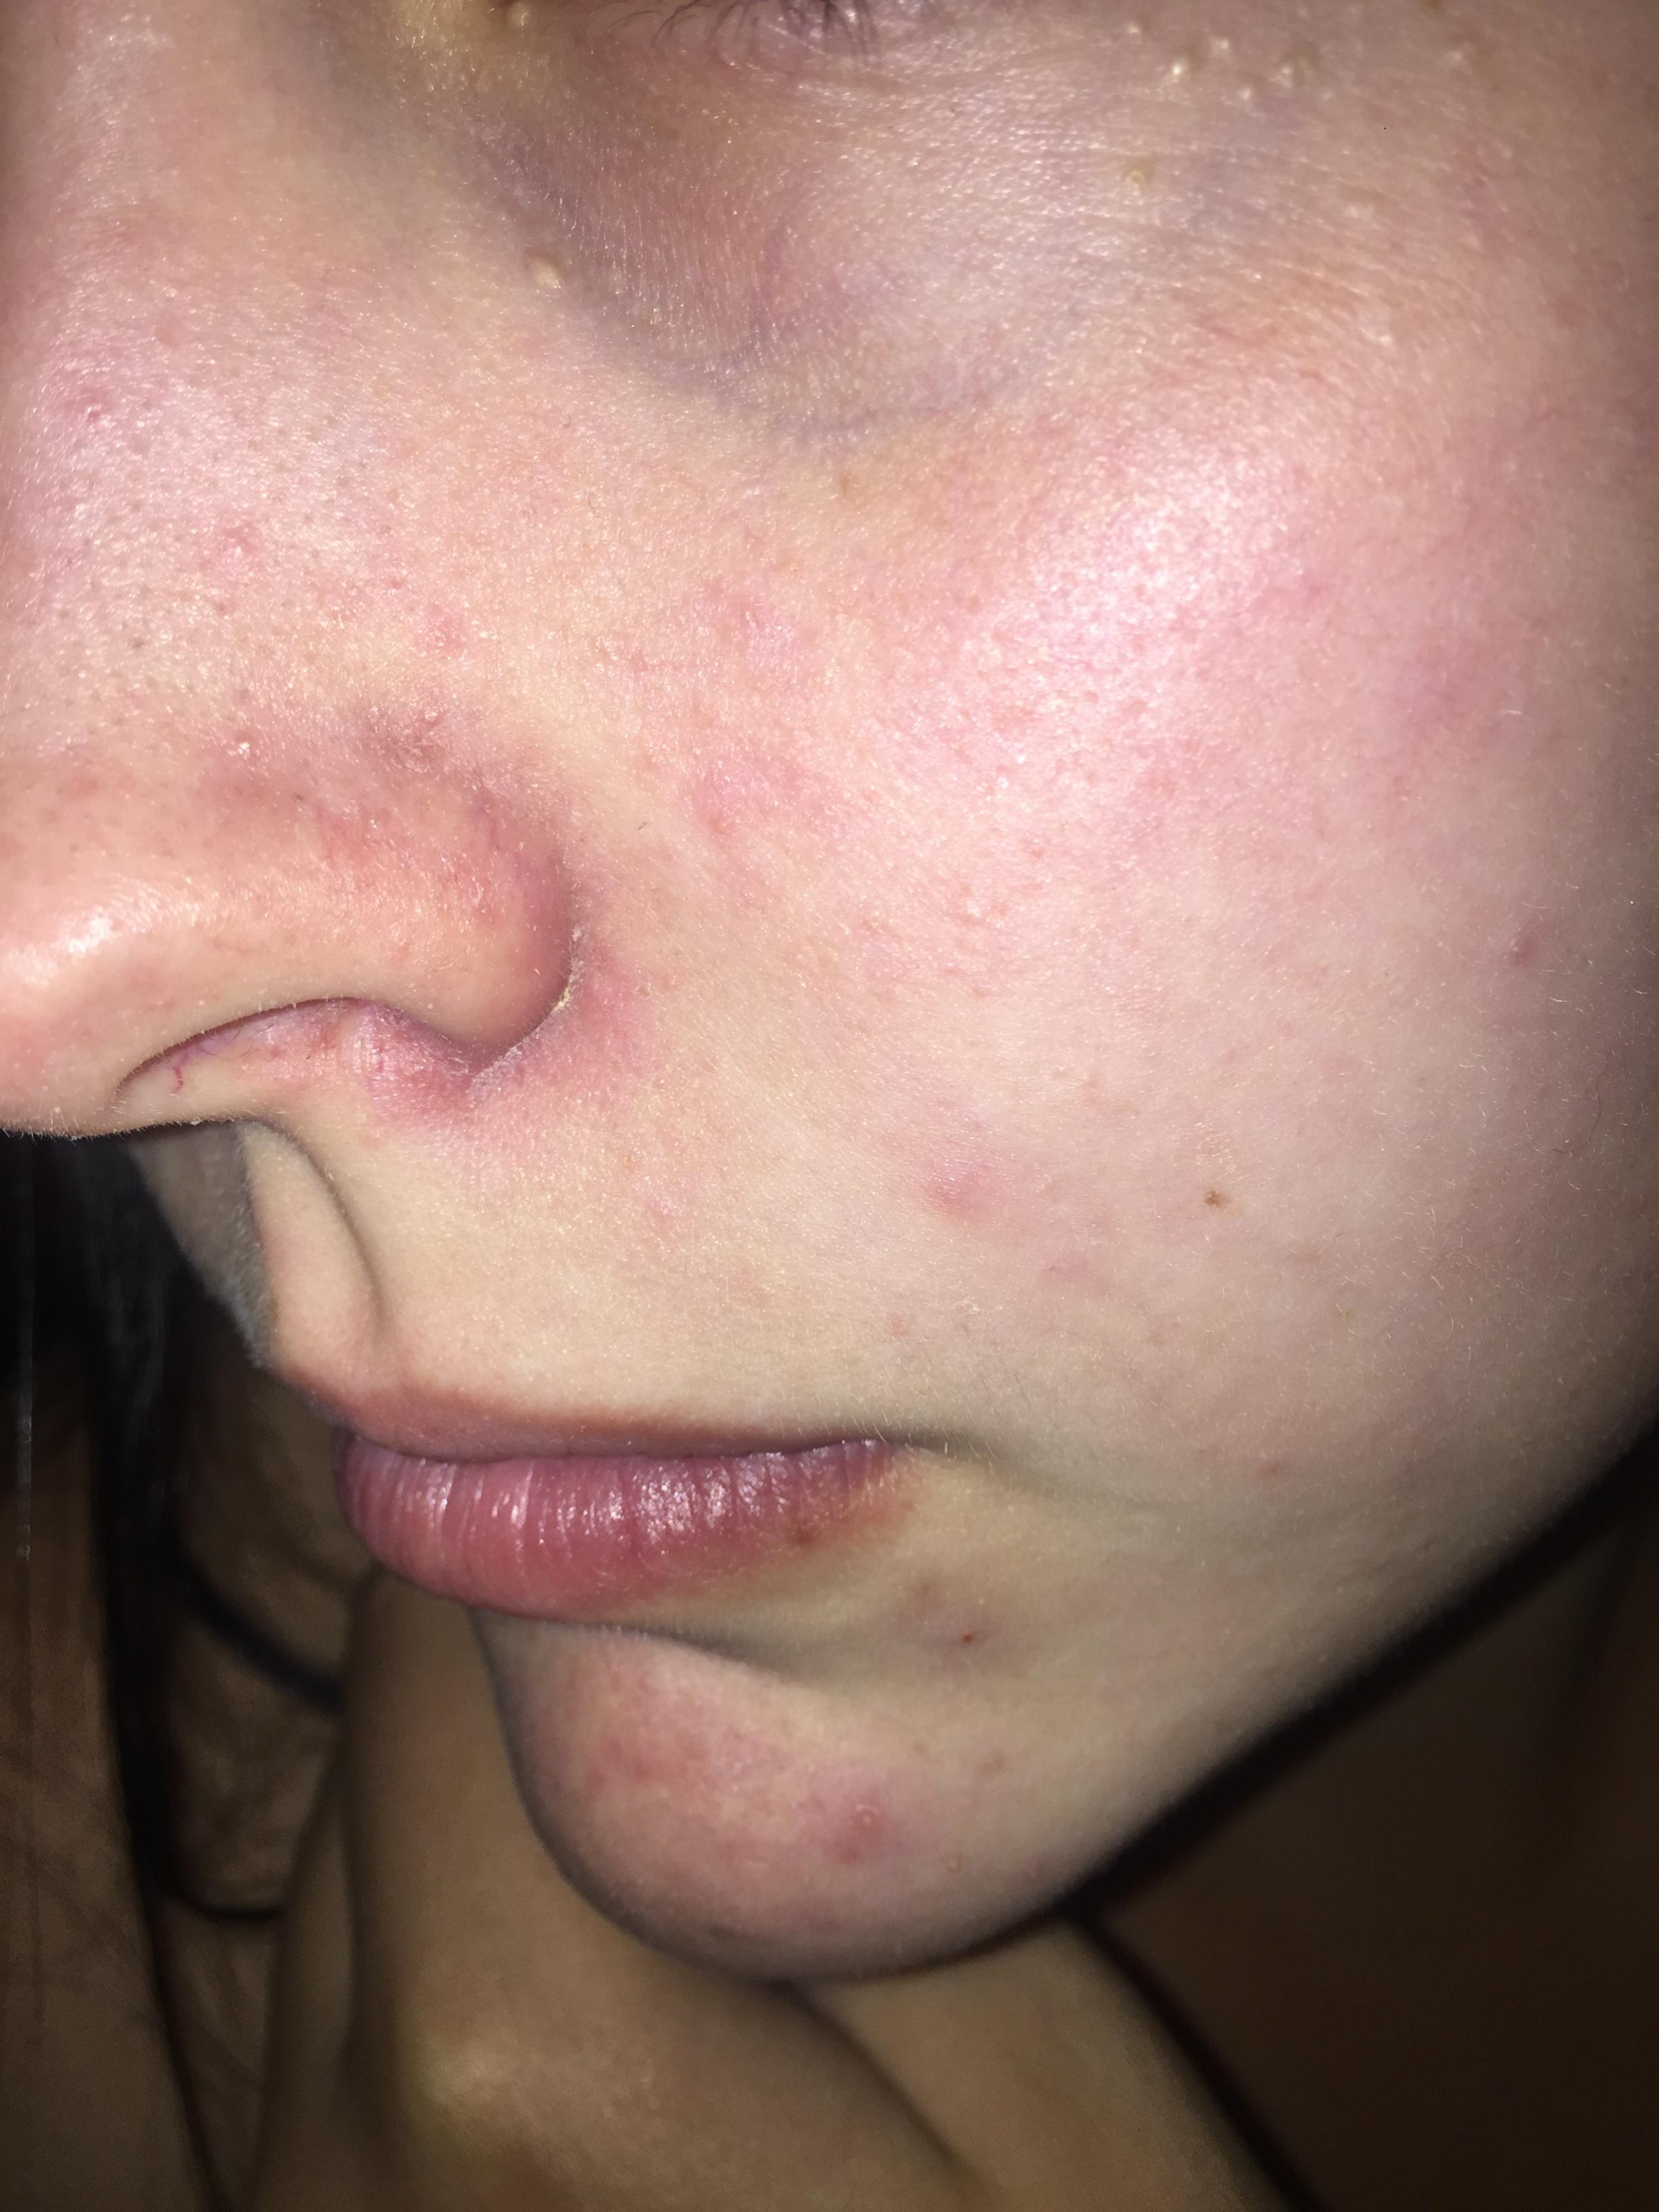 Redness/irritated on face Rosacea facial redness – Acne.org Forum